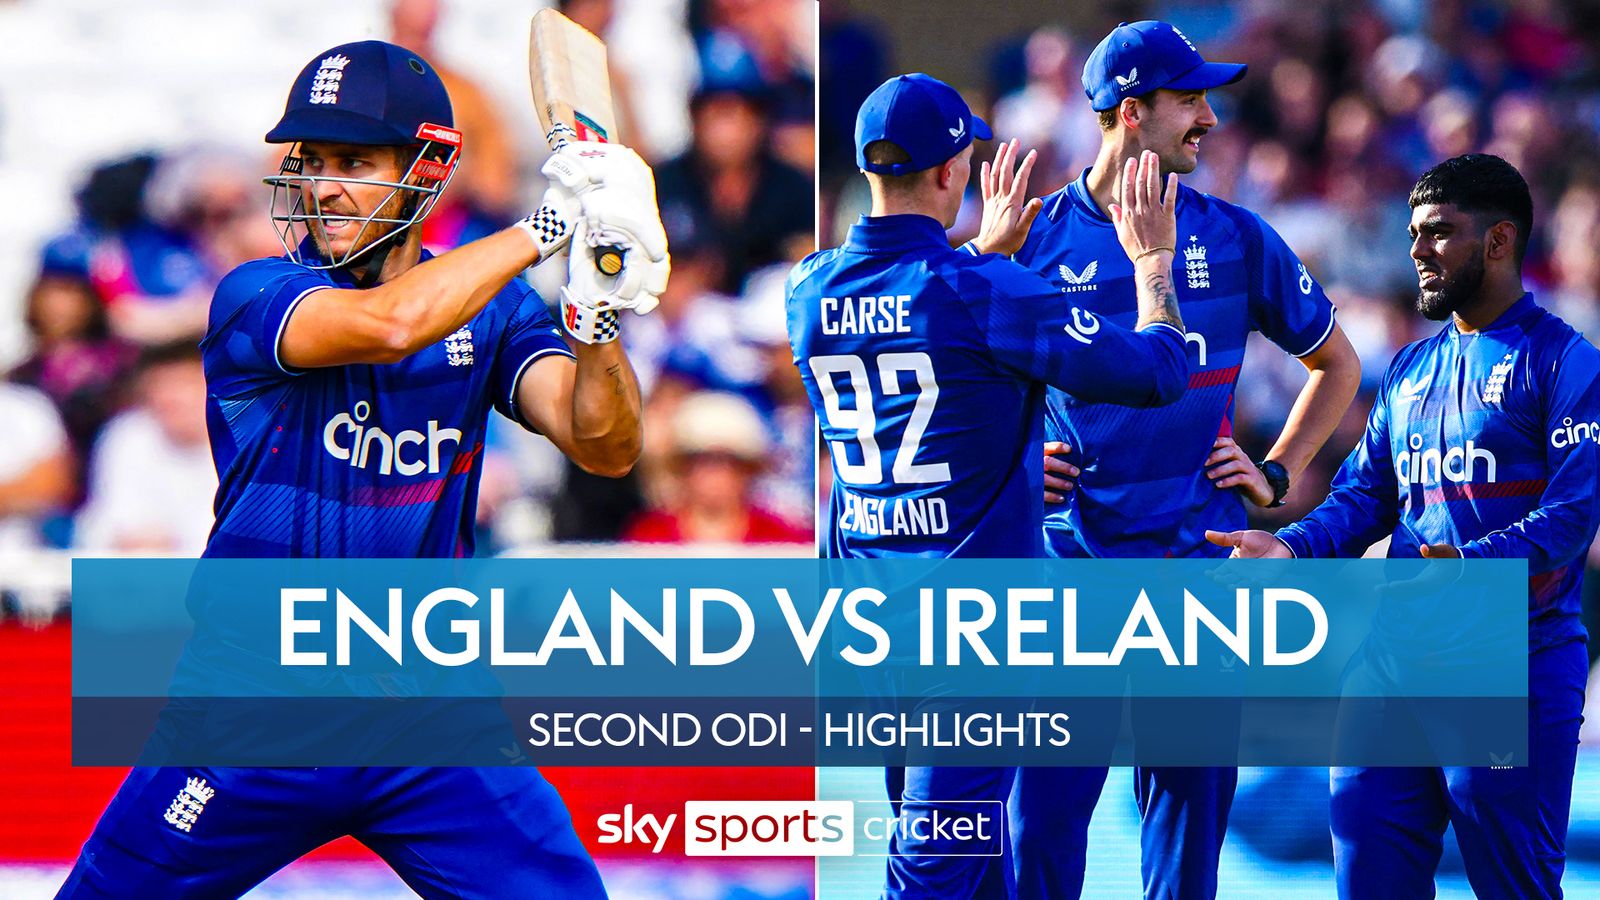 England vs Ireland England debutants impress to help win second ODI by